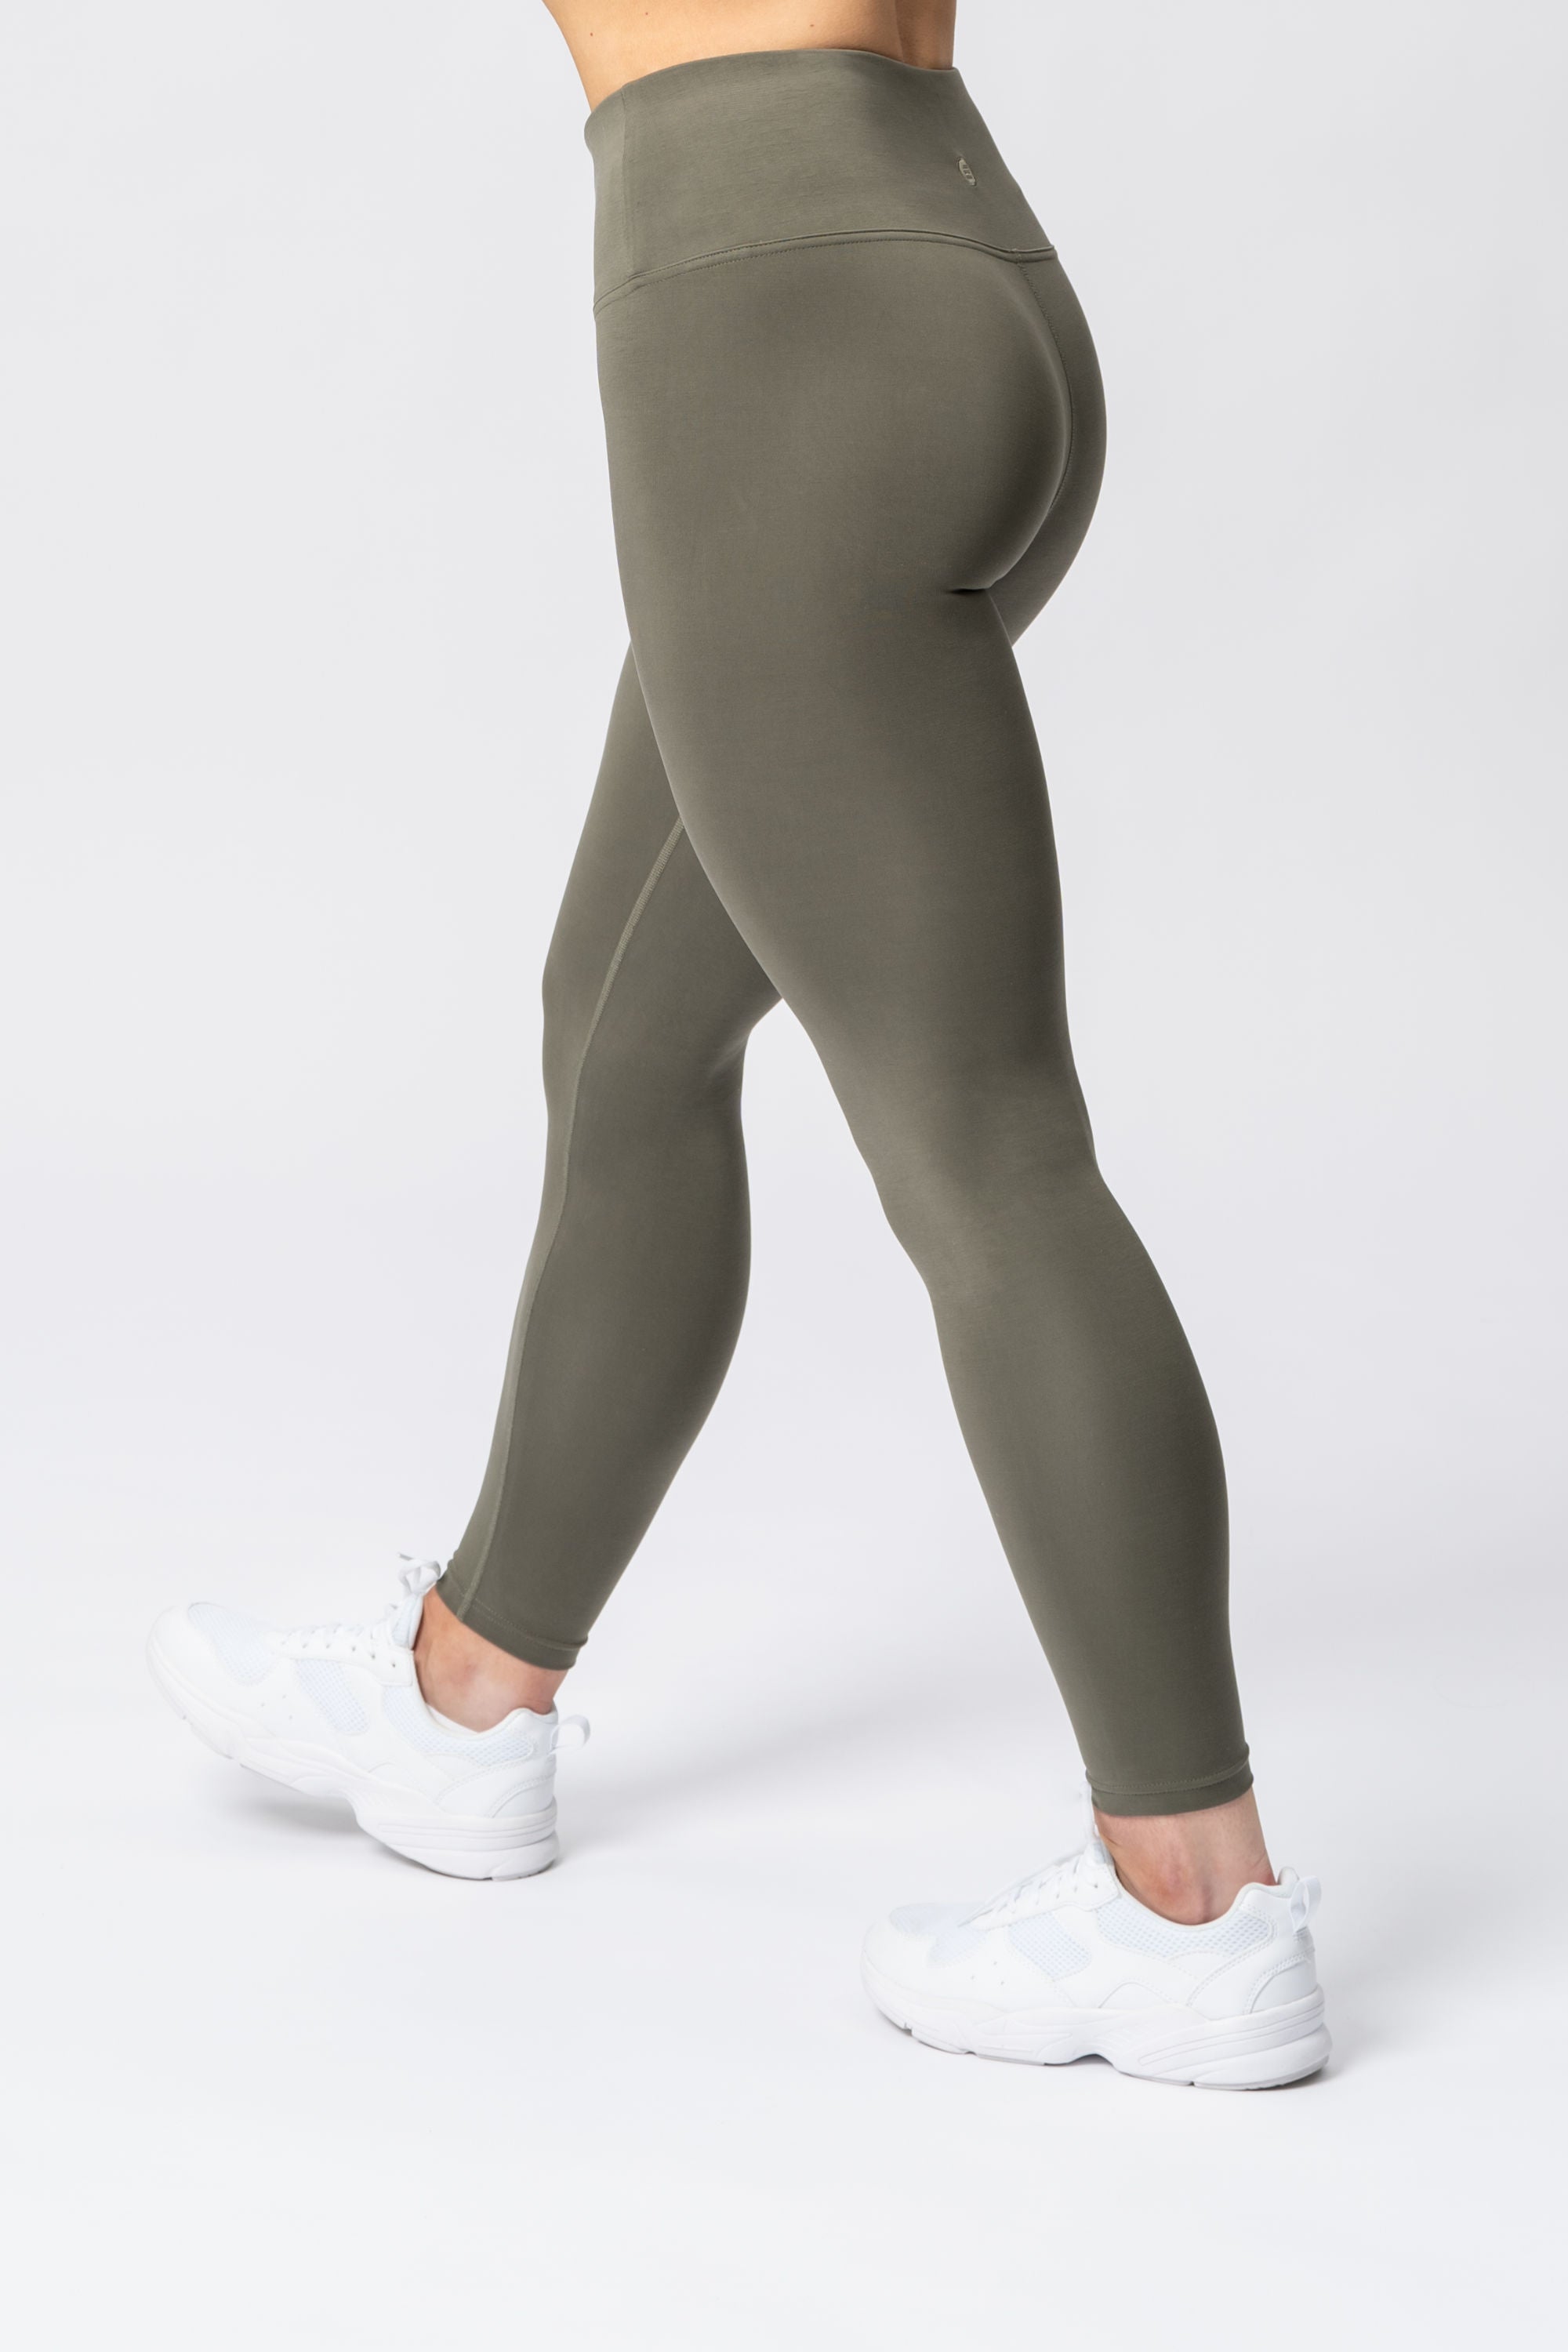 100% Organic Cotton High Waisted Ankle Length Leggings for Girls - Green